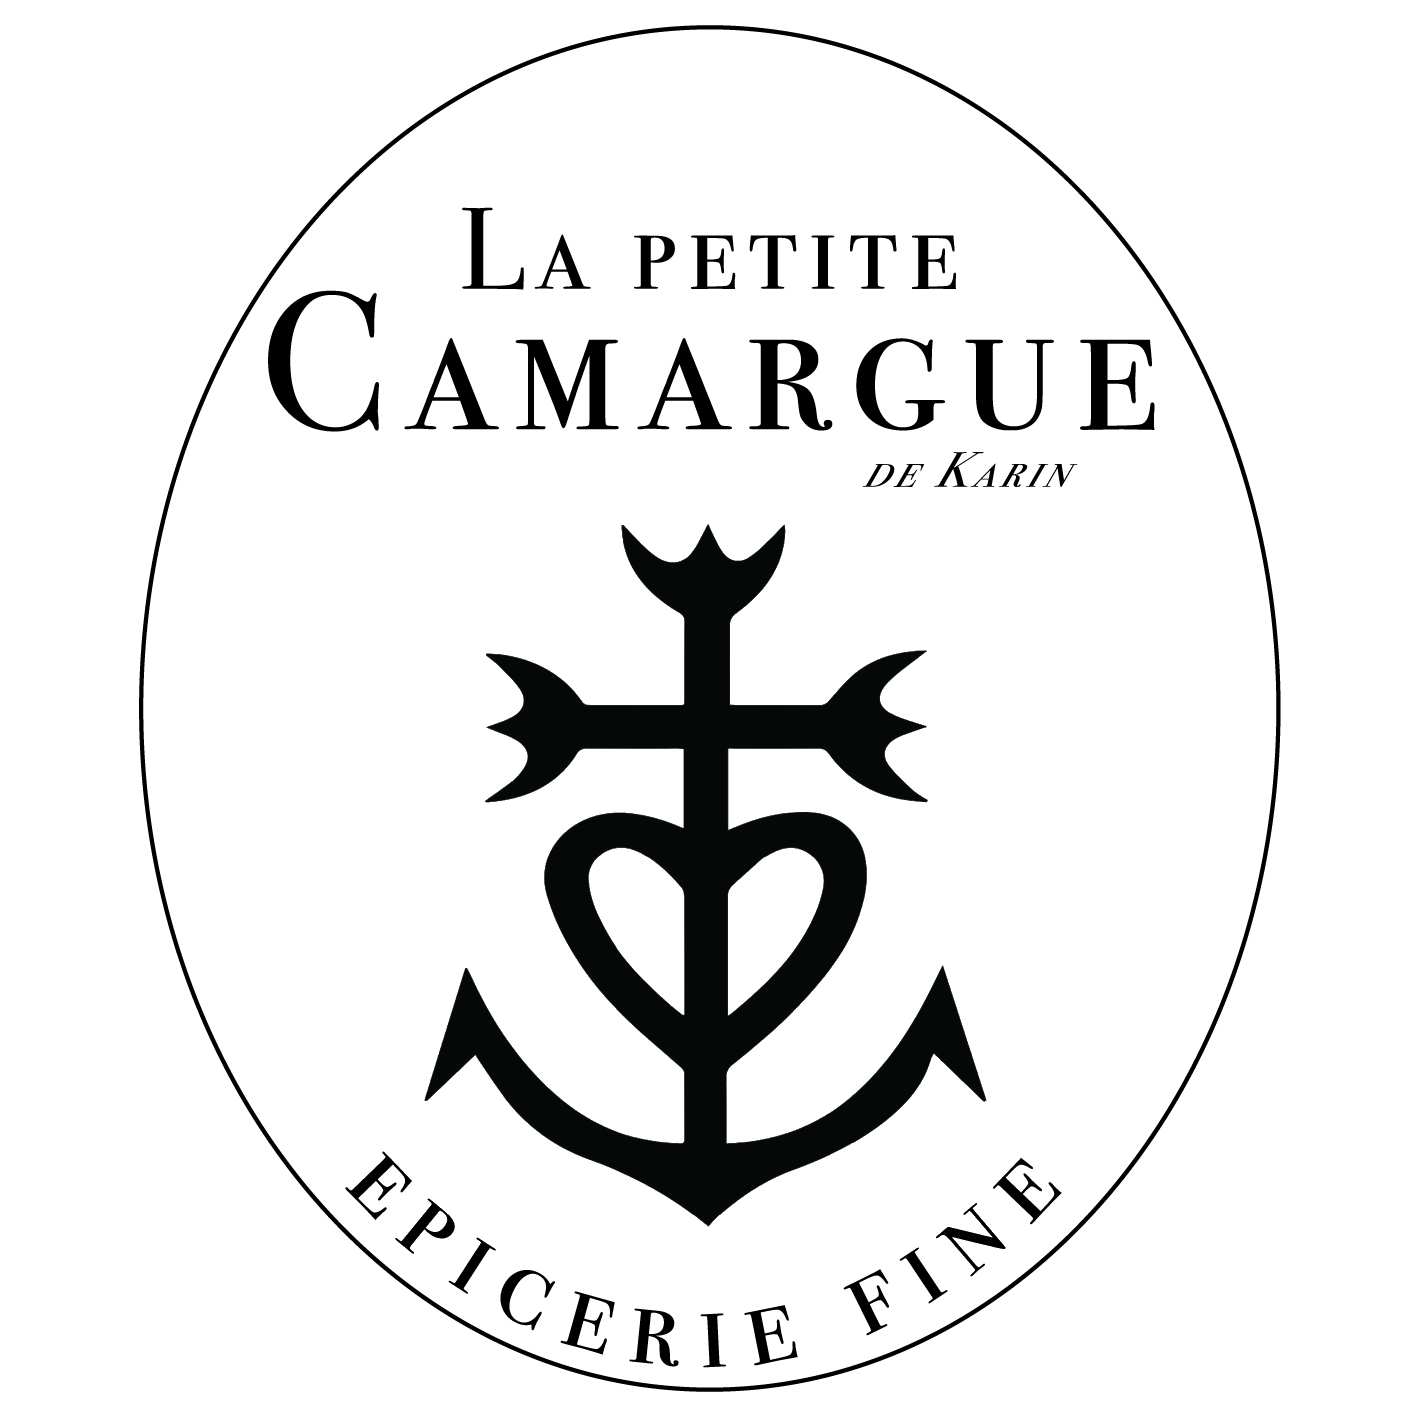 La Petite Camargue